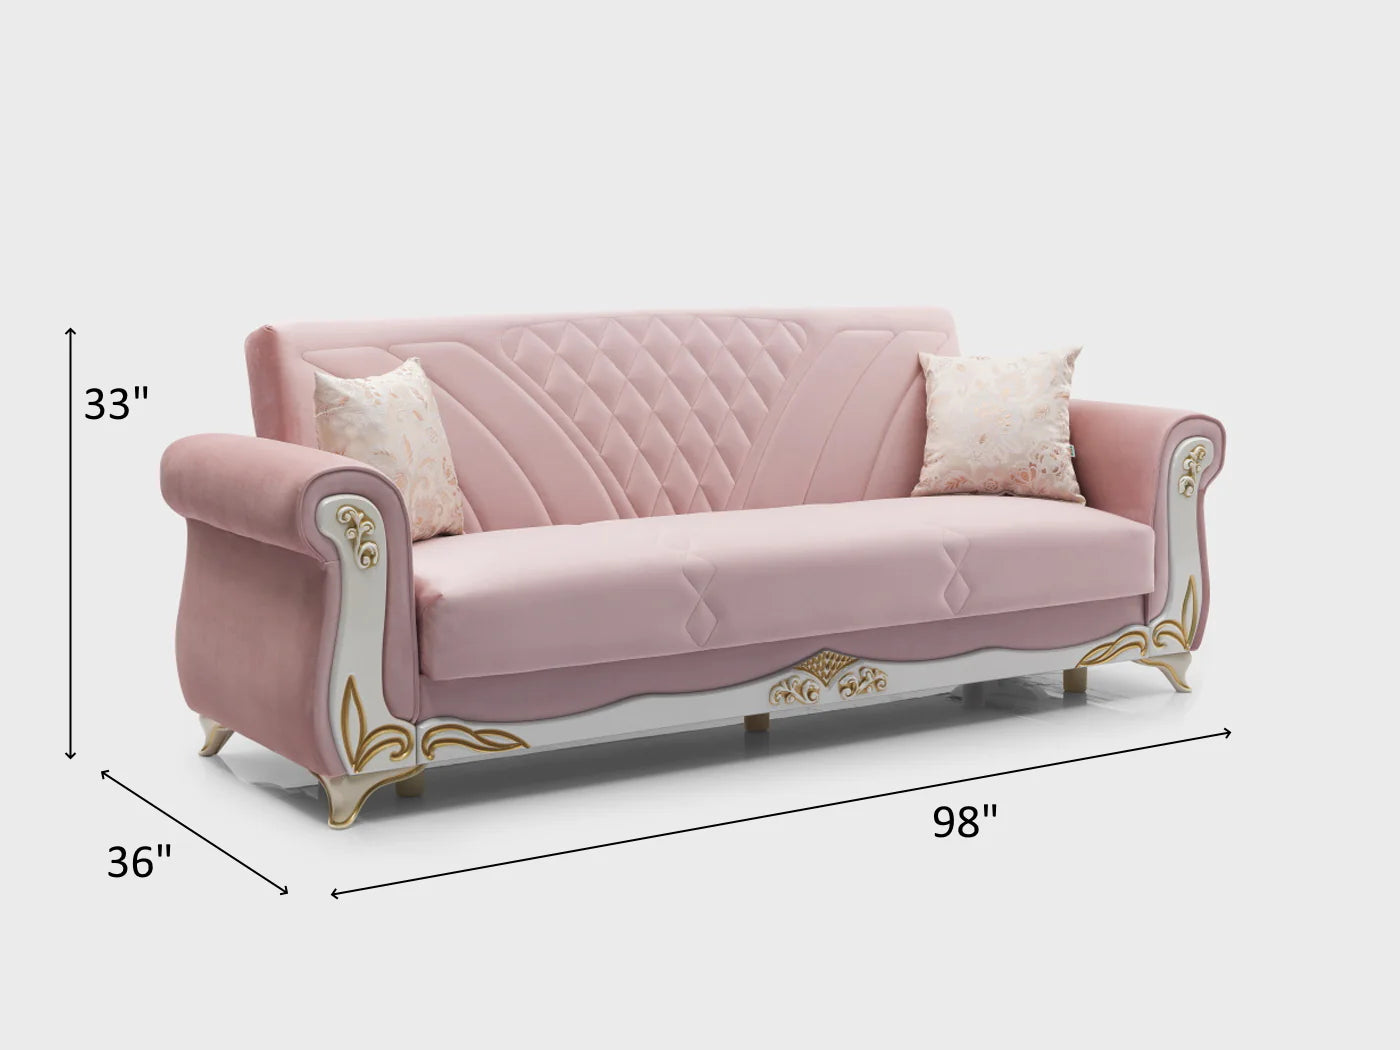 8 Seater Sofa Set: 3 Piece Sleeper Living Room Set